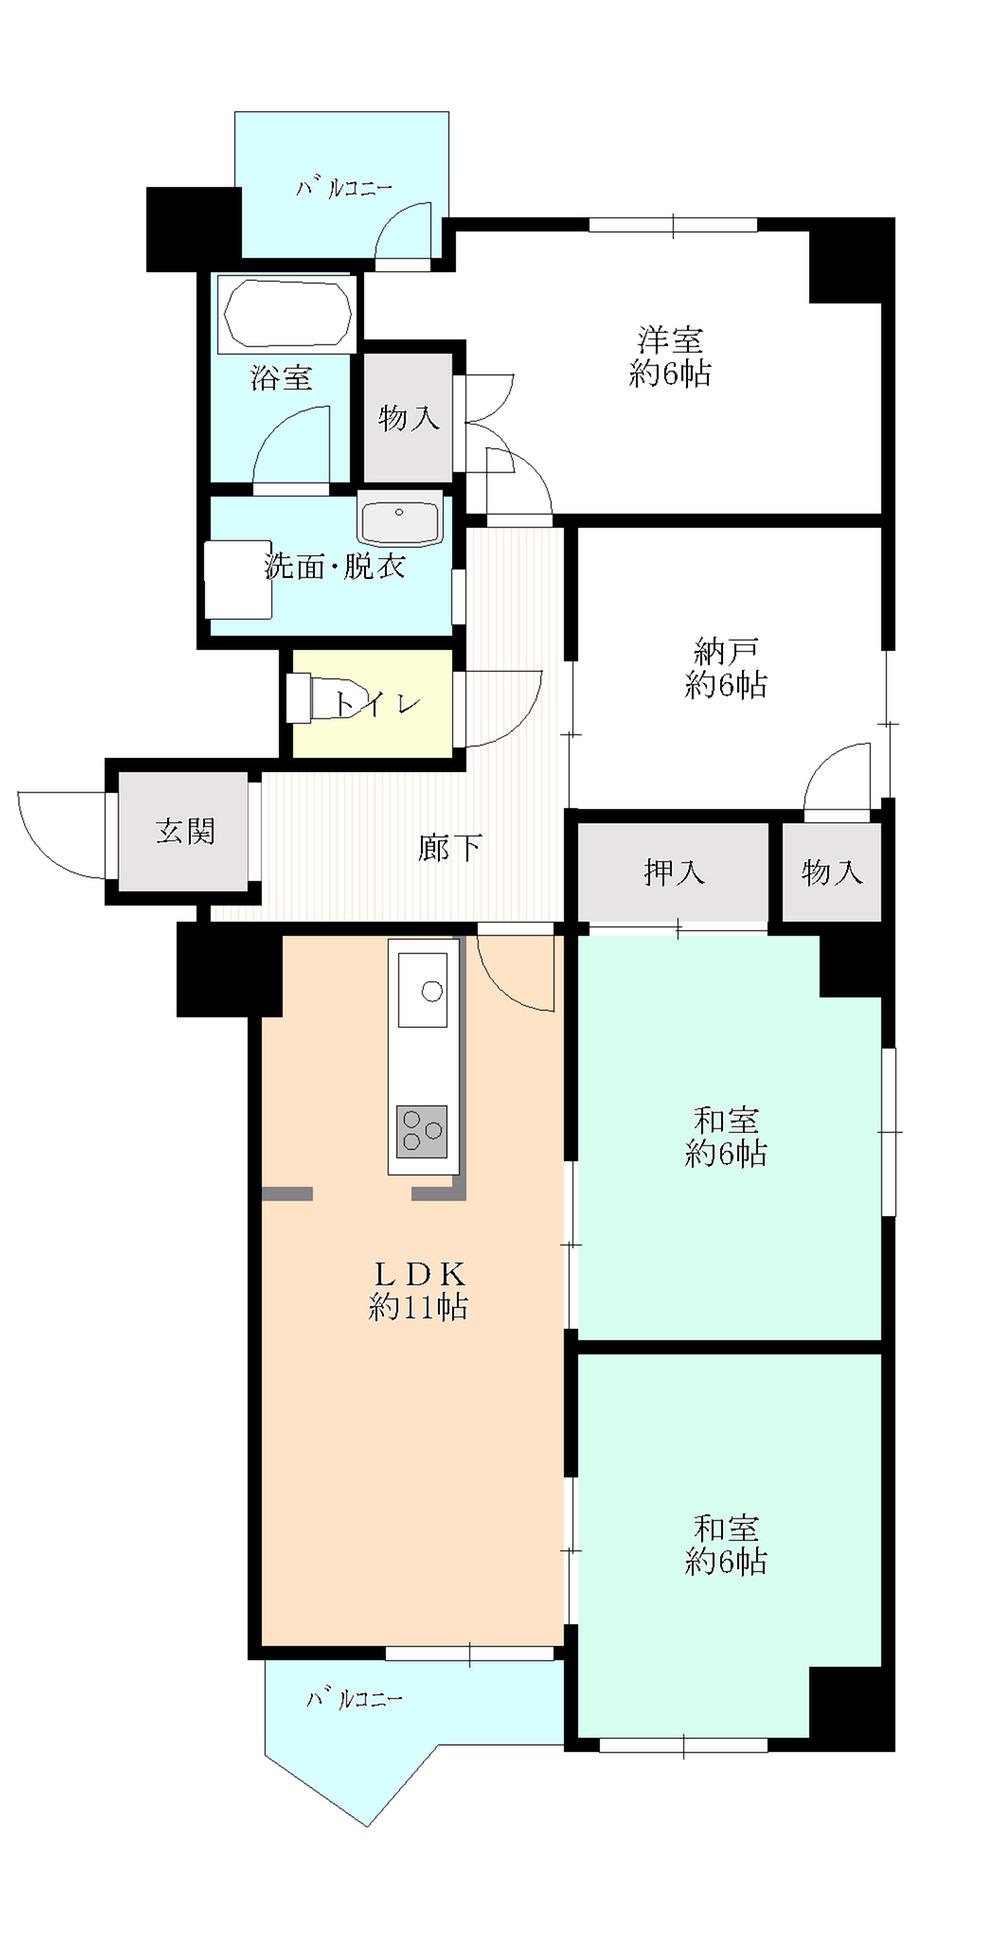 Floor plan. 3LDK + S (storeroom), Price 22,800,000 yen, Occupied area 77.35 sq m , Balcony area 6.21 sq m